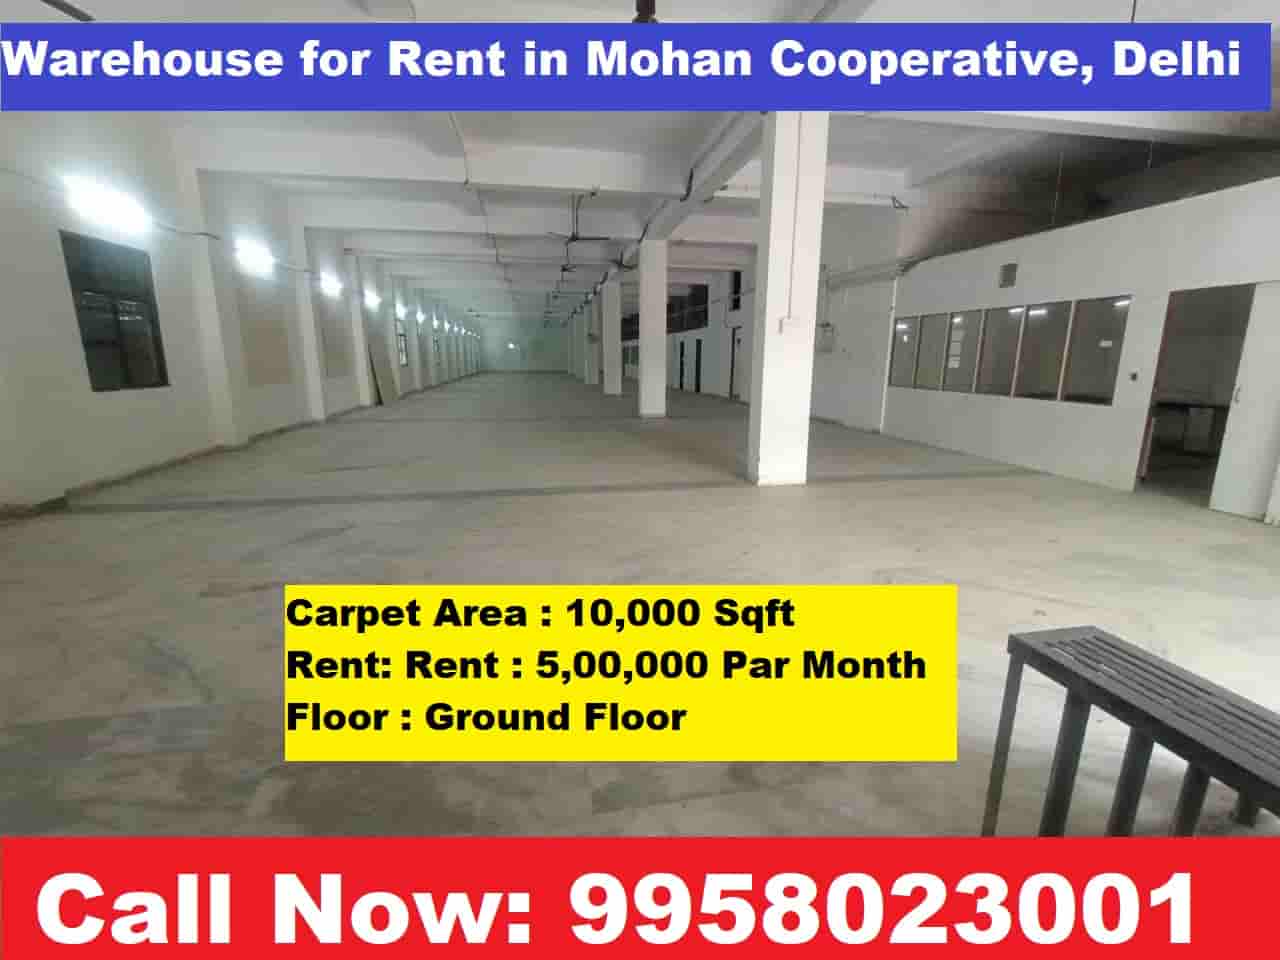 Warehouse for Rent in Cooperative Industrial Area, Delhi